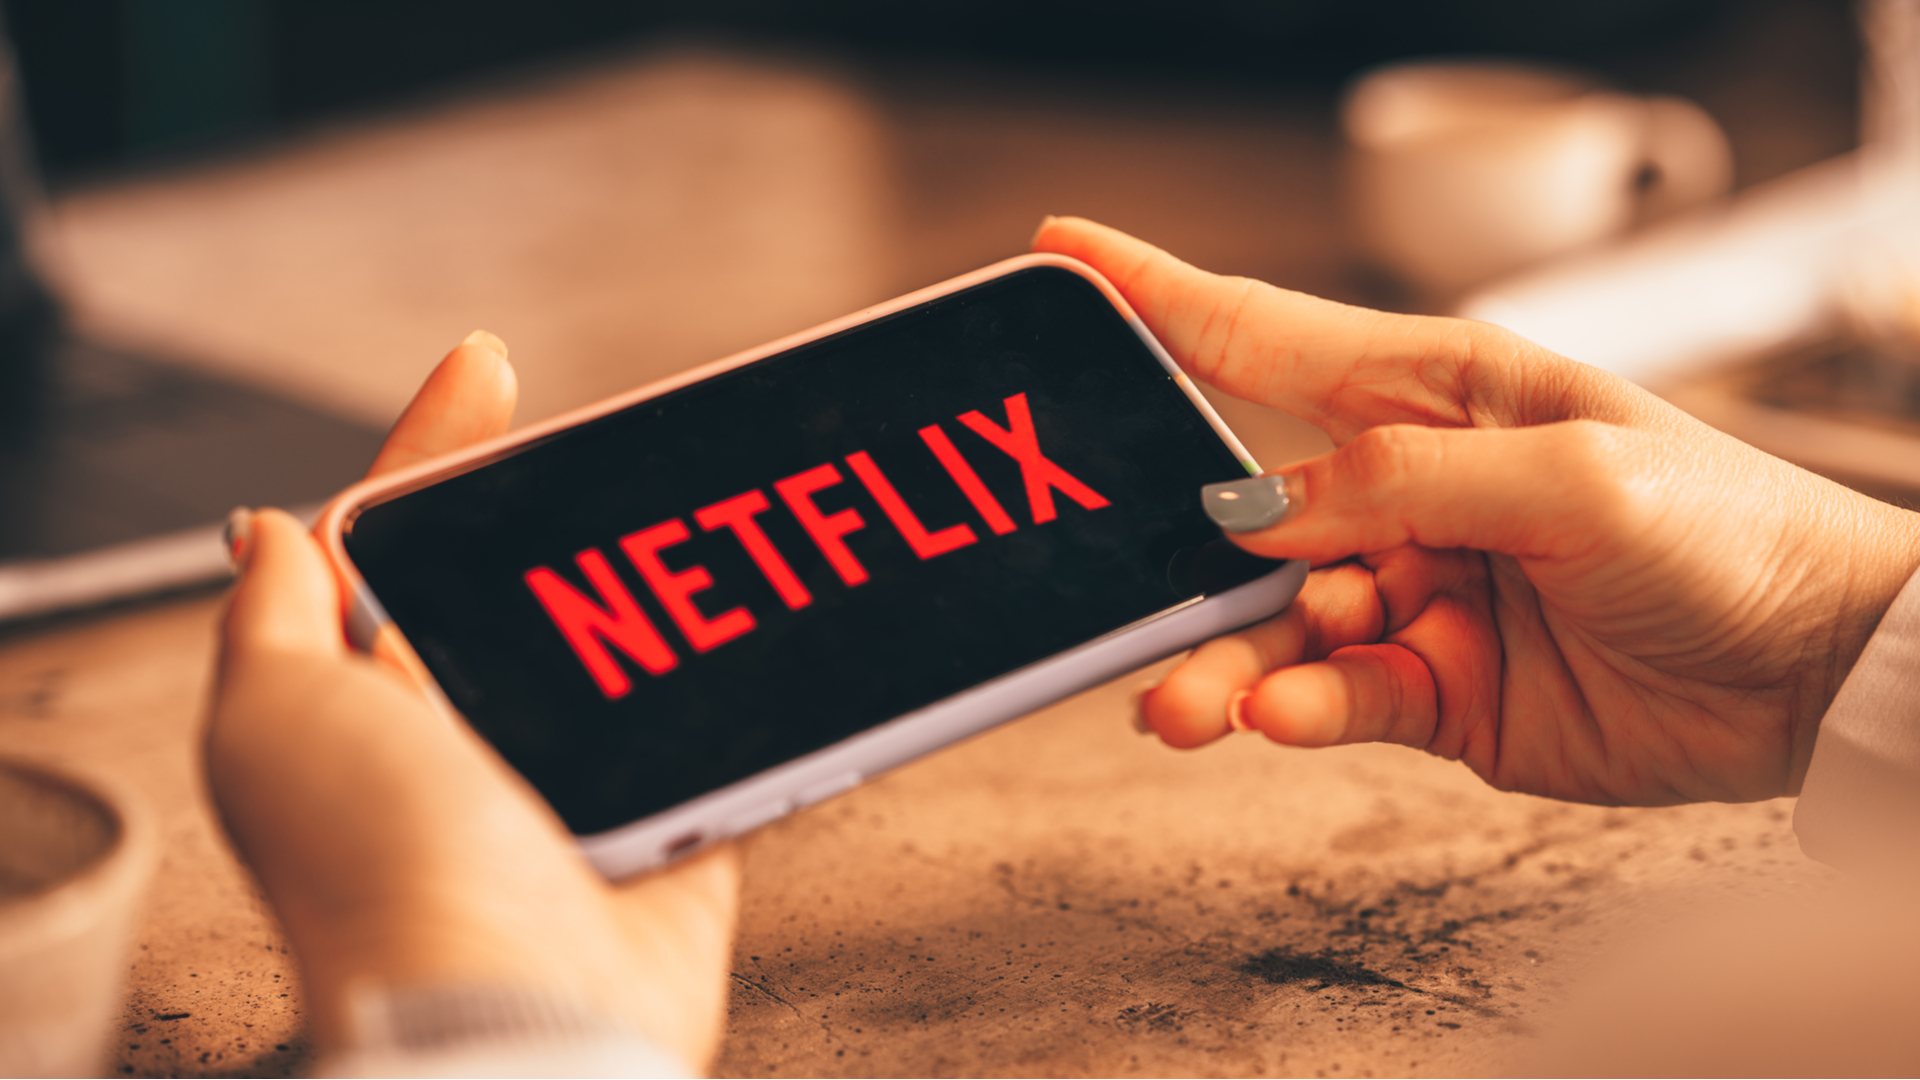 Netflix logo on a smartphone